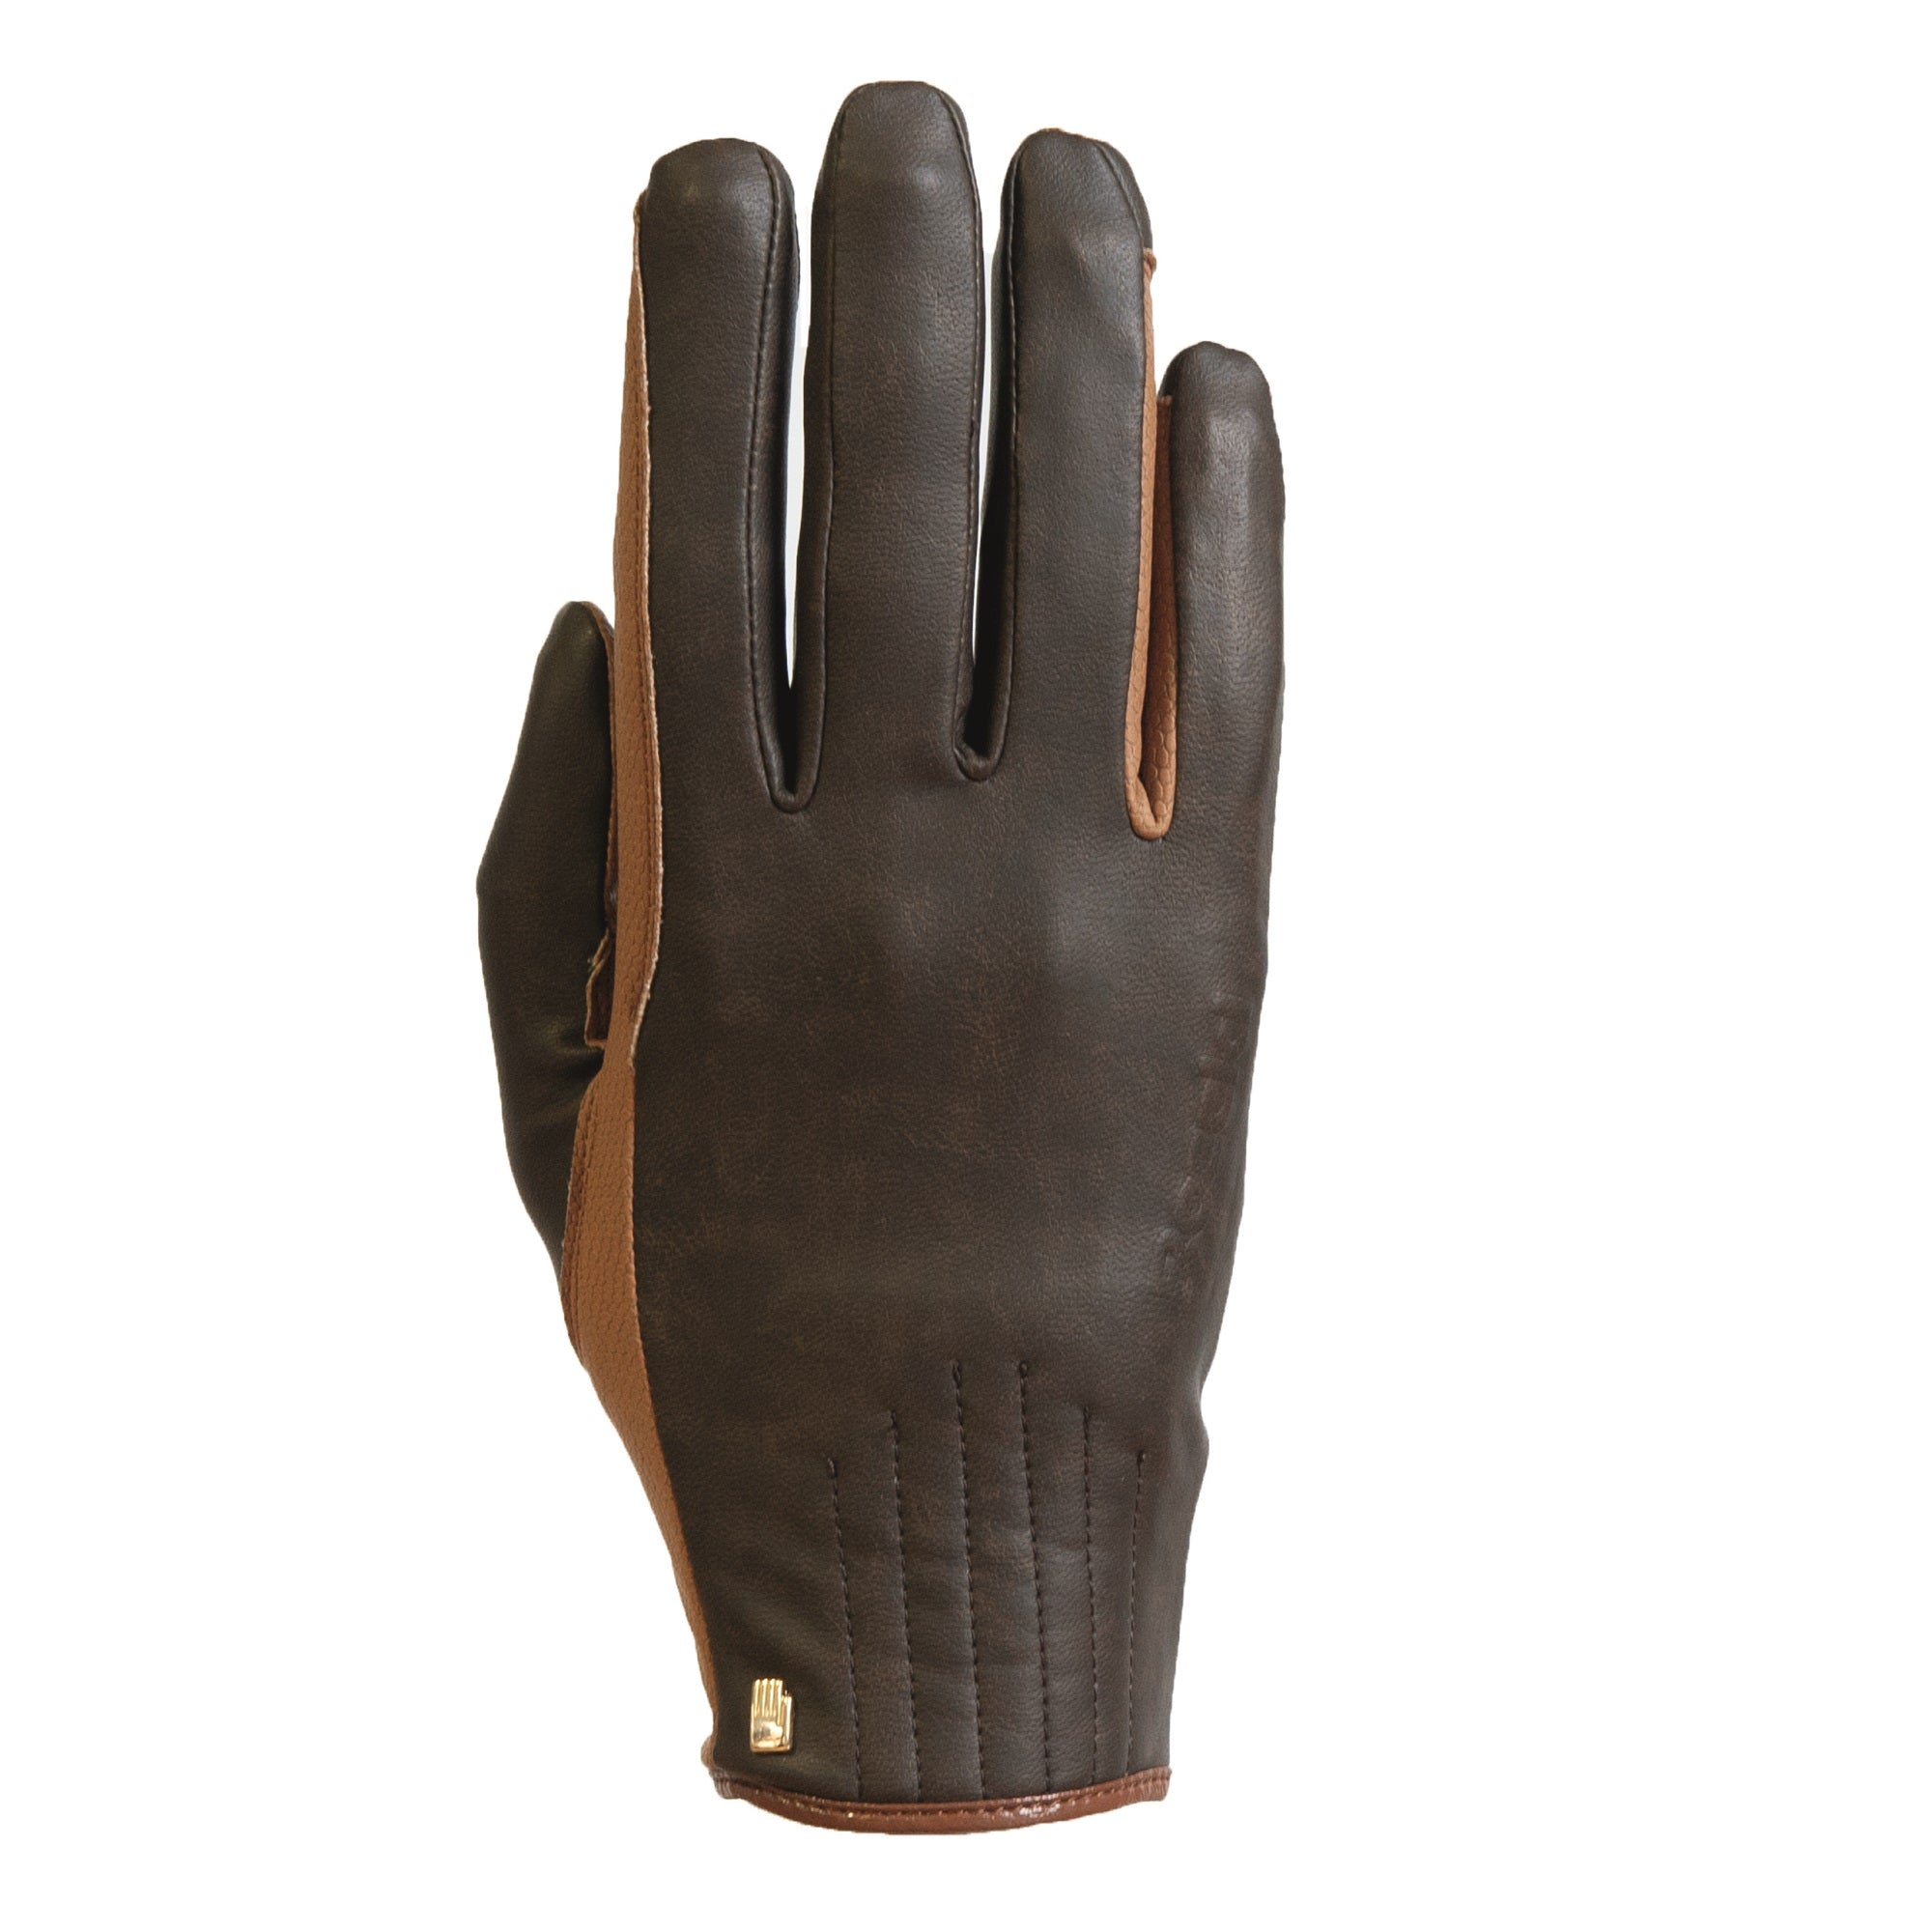 Roeckl Wels Winter Glove - Mocha Antique